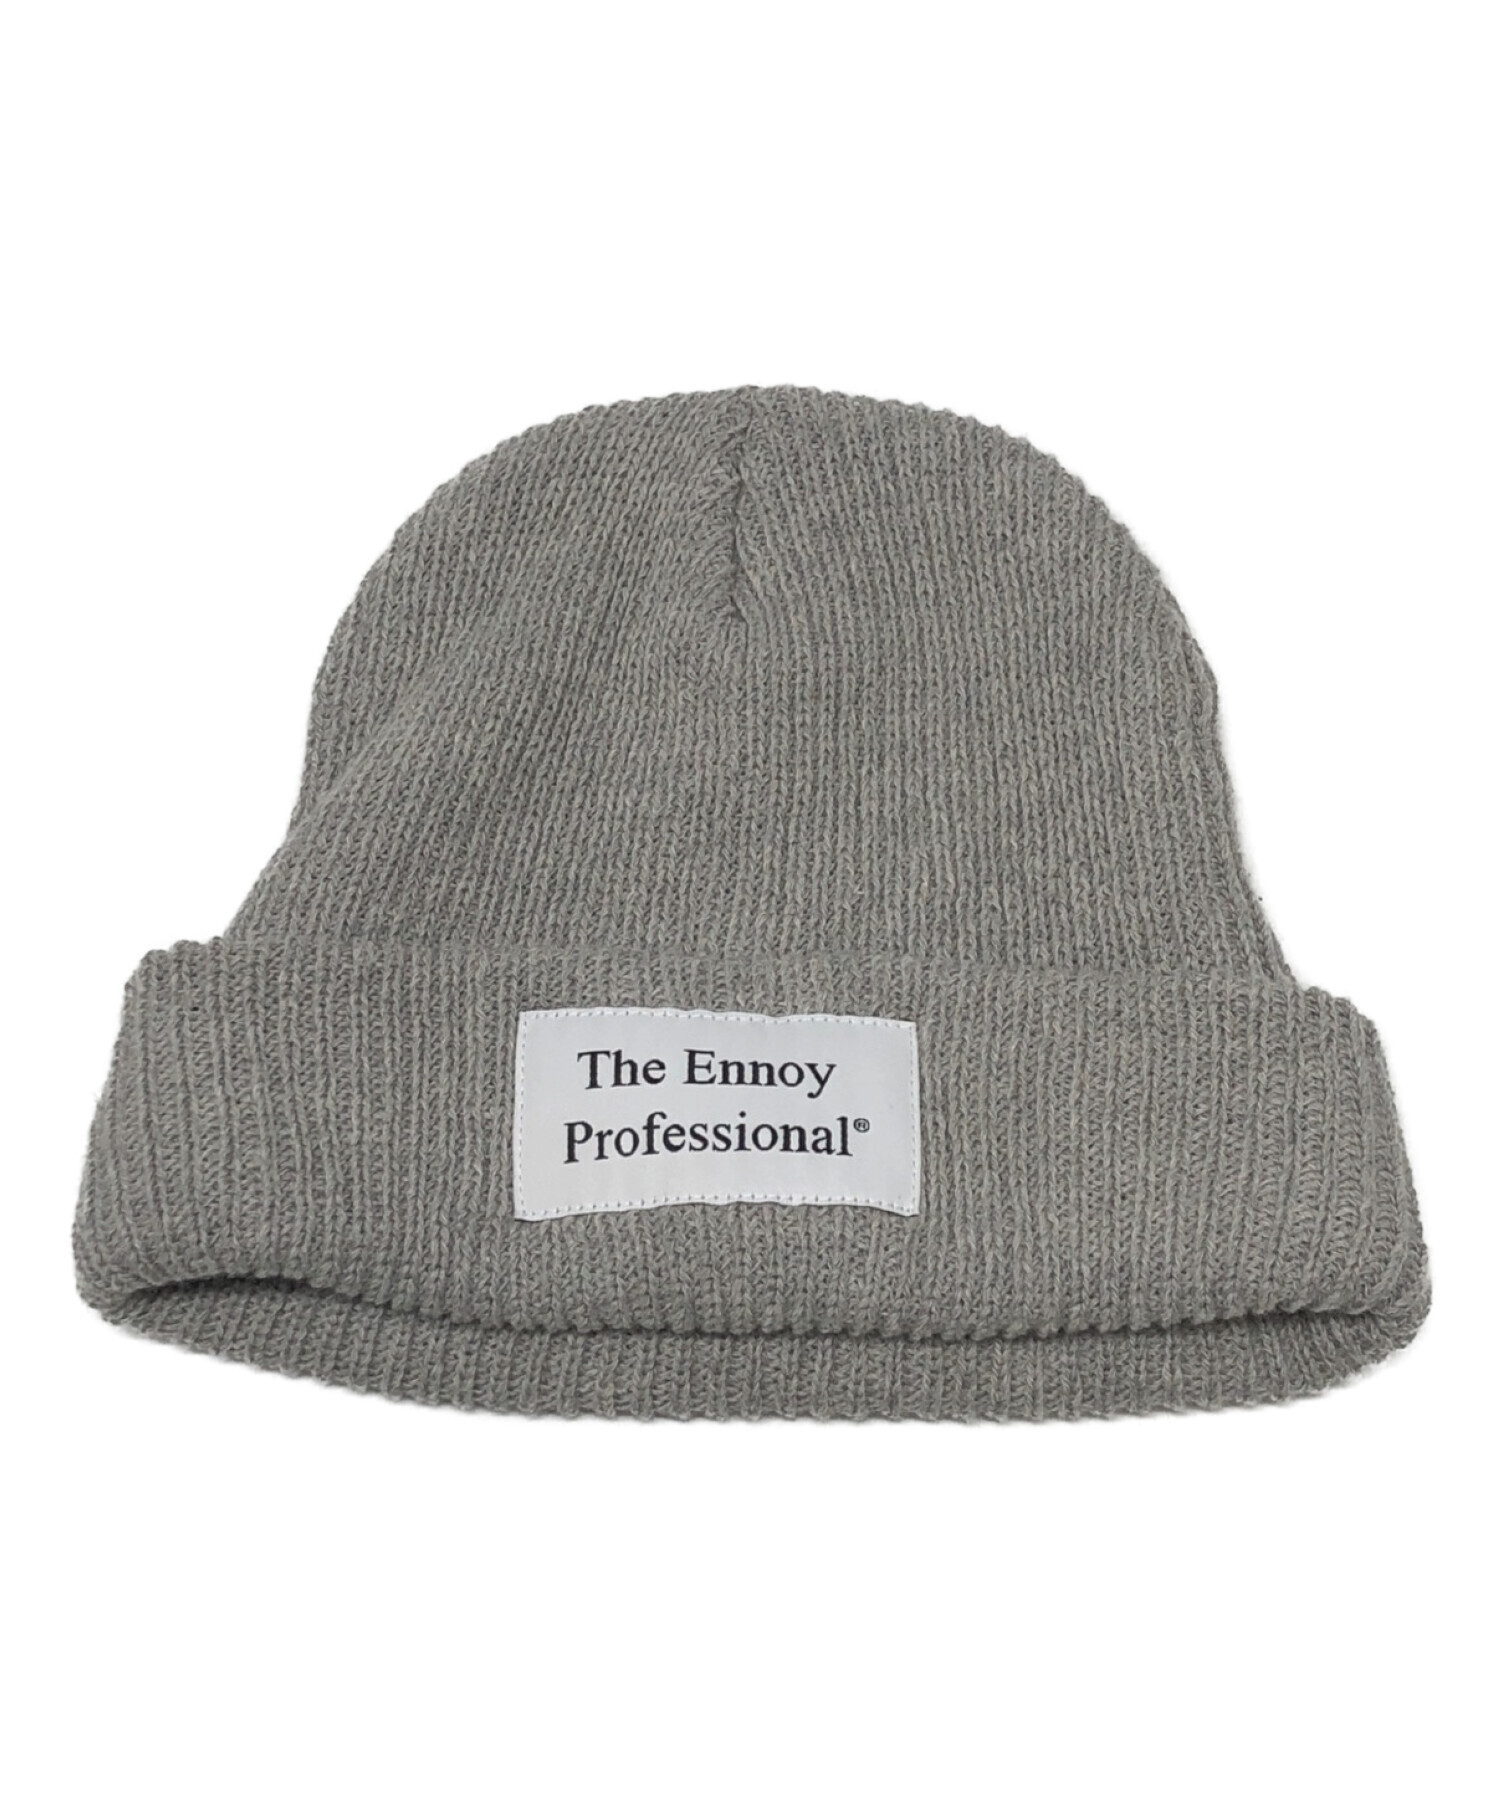 The Ennoy Professional (ザ エンノイ プロフェッショナル) ニット帽 グレー